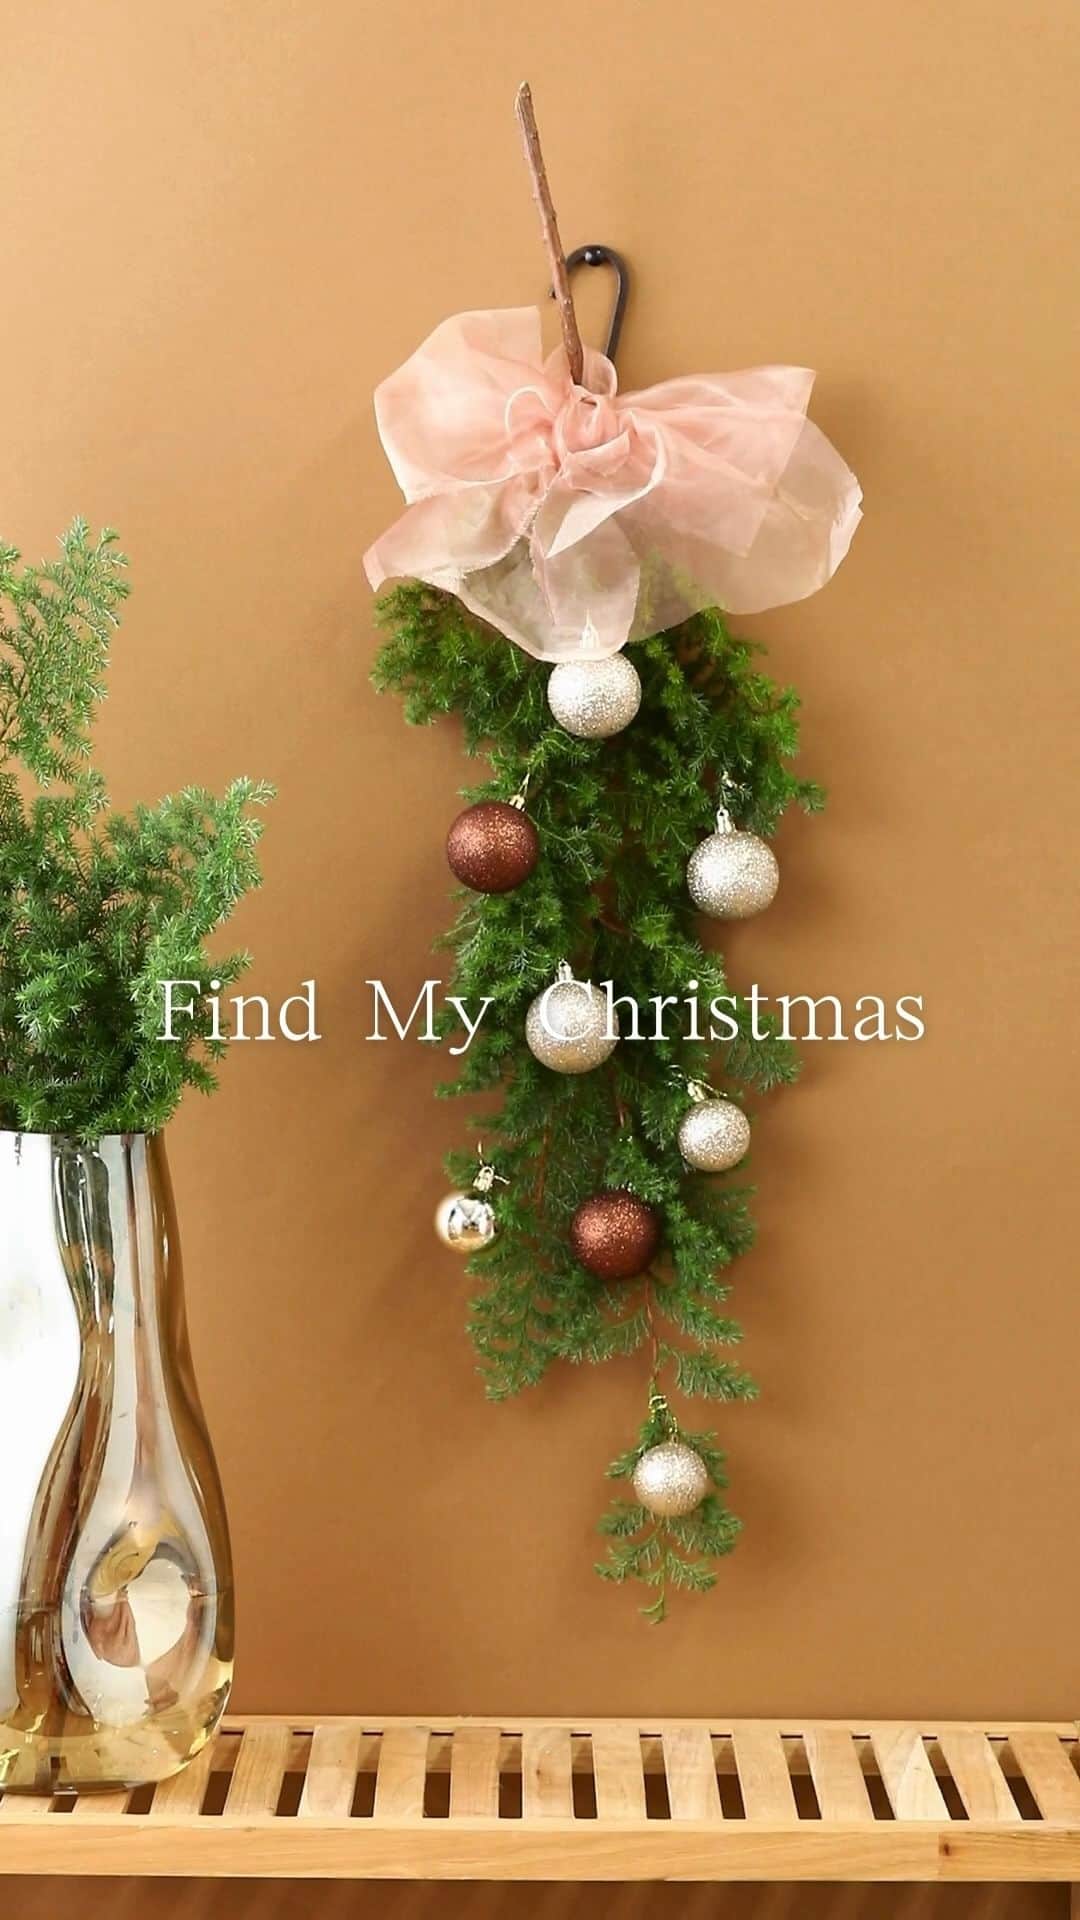 Francfrancのインスタグラム：「クリスマスを、わたし色に。  ホリデーシーズンのデコレーションを “わたしらしく”楽しもう💓  ツリー以外にも様々な飾り方を楽しめるオーナメント。  針葉樹にお好みのリボンとオーナメントを飾るだけで クリスマスの装飾にぴったりなスワッグに💐✨  思い思いのデコレーションを楽しんで あなただけの特別なクリスマスをお過ごしください🎅  セットオーナメント 4cm 14個　¥900（税込） セットオーナメント 5cm 20個　¥1,300（税込）  #francfranc #フランフラン #francfrancのある生活 #クリスマス #オーナメント #クリスマスオーナメント #クリスマスデコレーション #クリスマスインテリア #フランフランクリスマス #FINDMYCHRISTMAS」